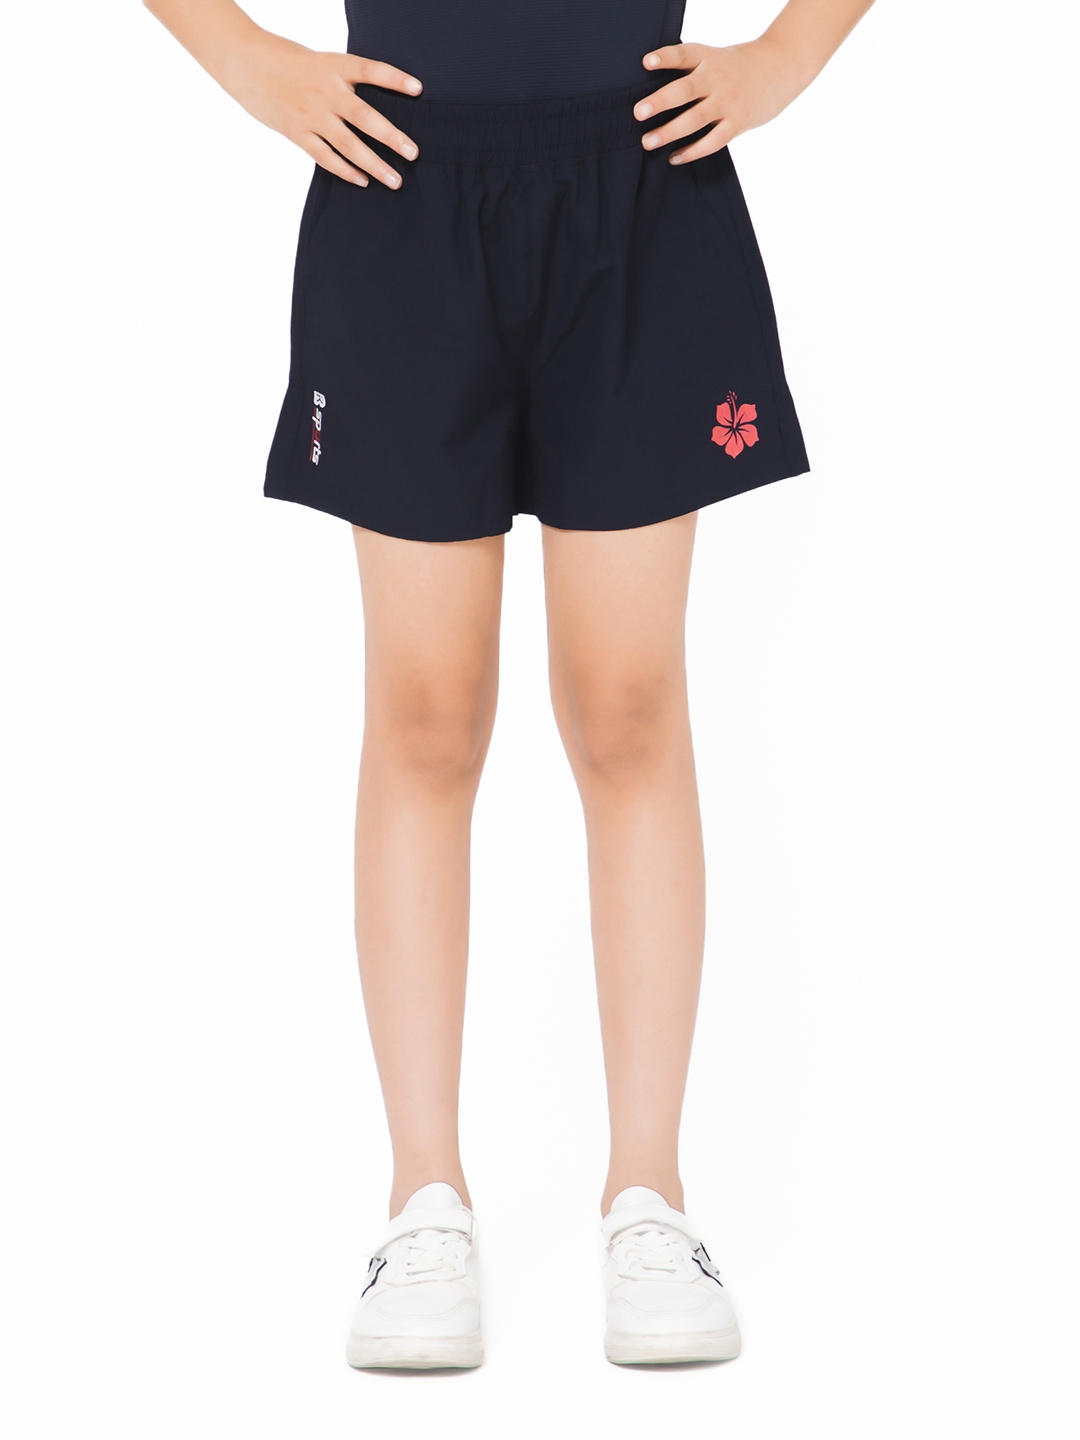 Women's Mid-Length Athletic Shorts